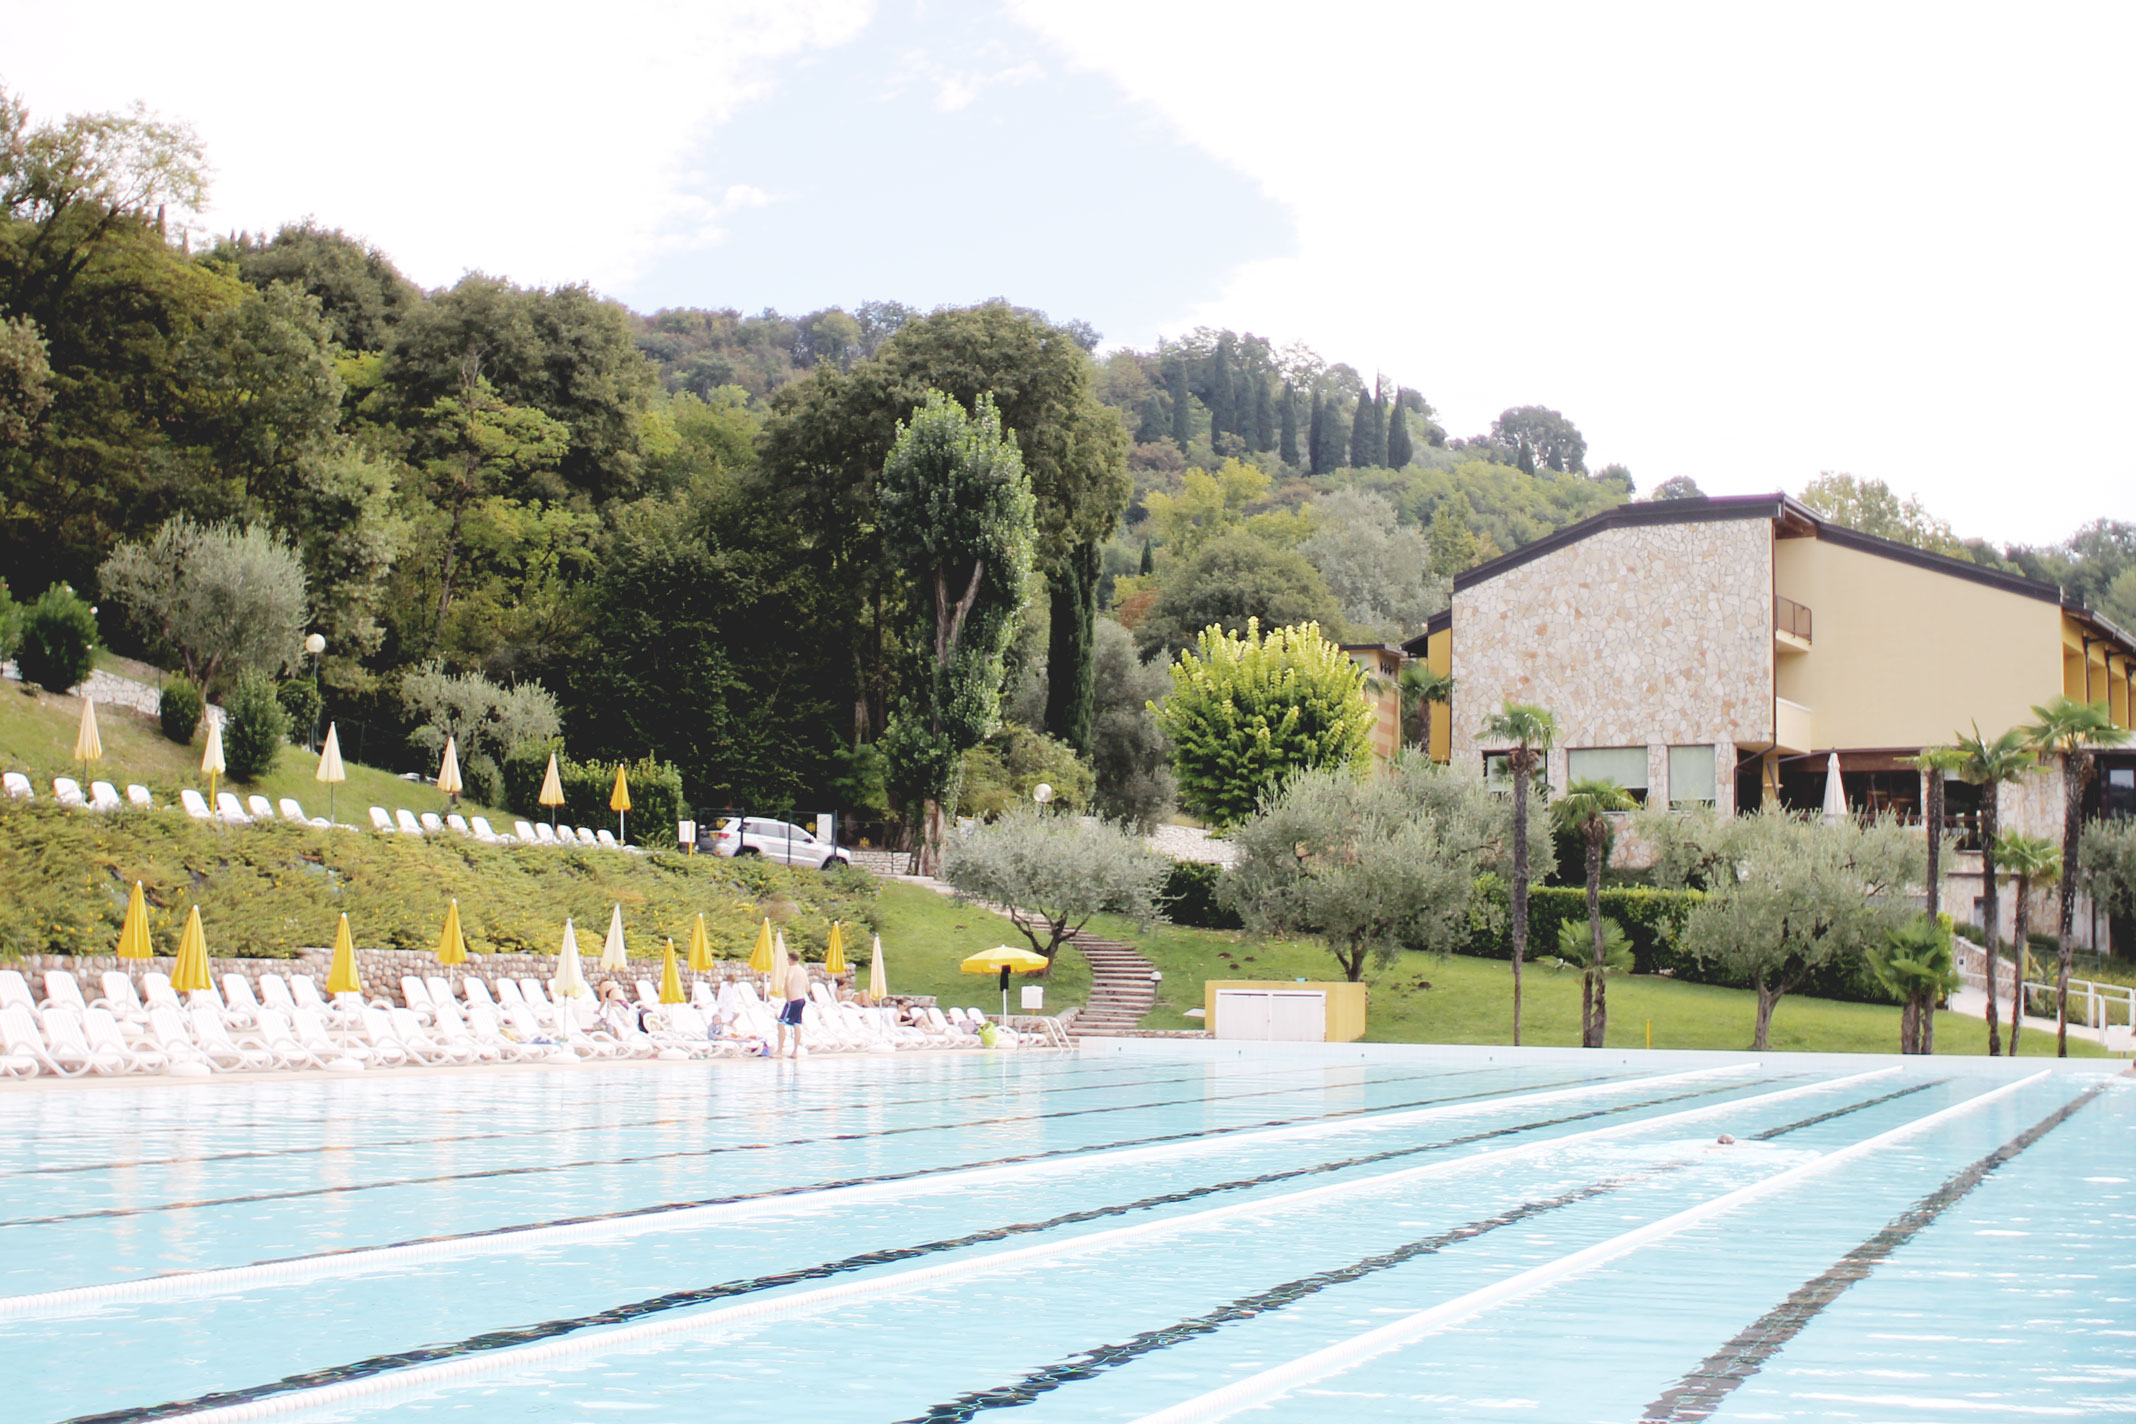 Styleat30 Travel Blog - Poiano Resort Hotel Review - Lake Garda Holiday - Italy Travel Guide 35